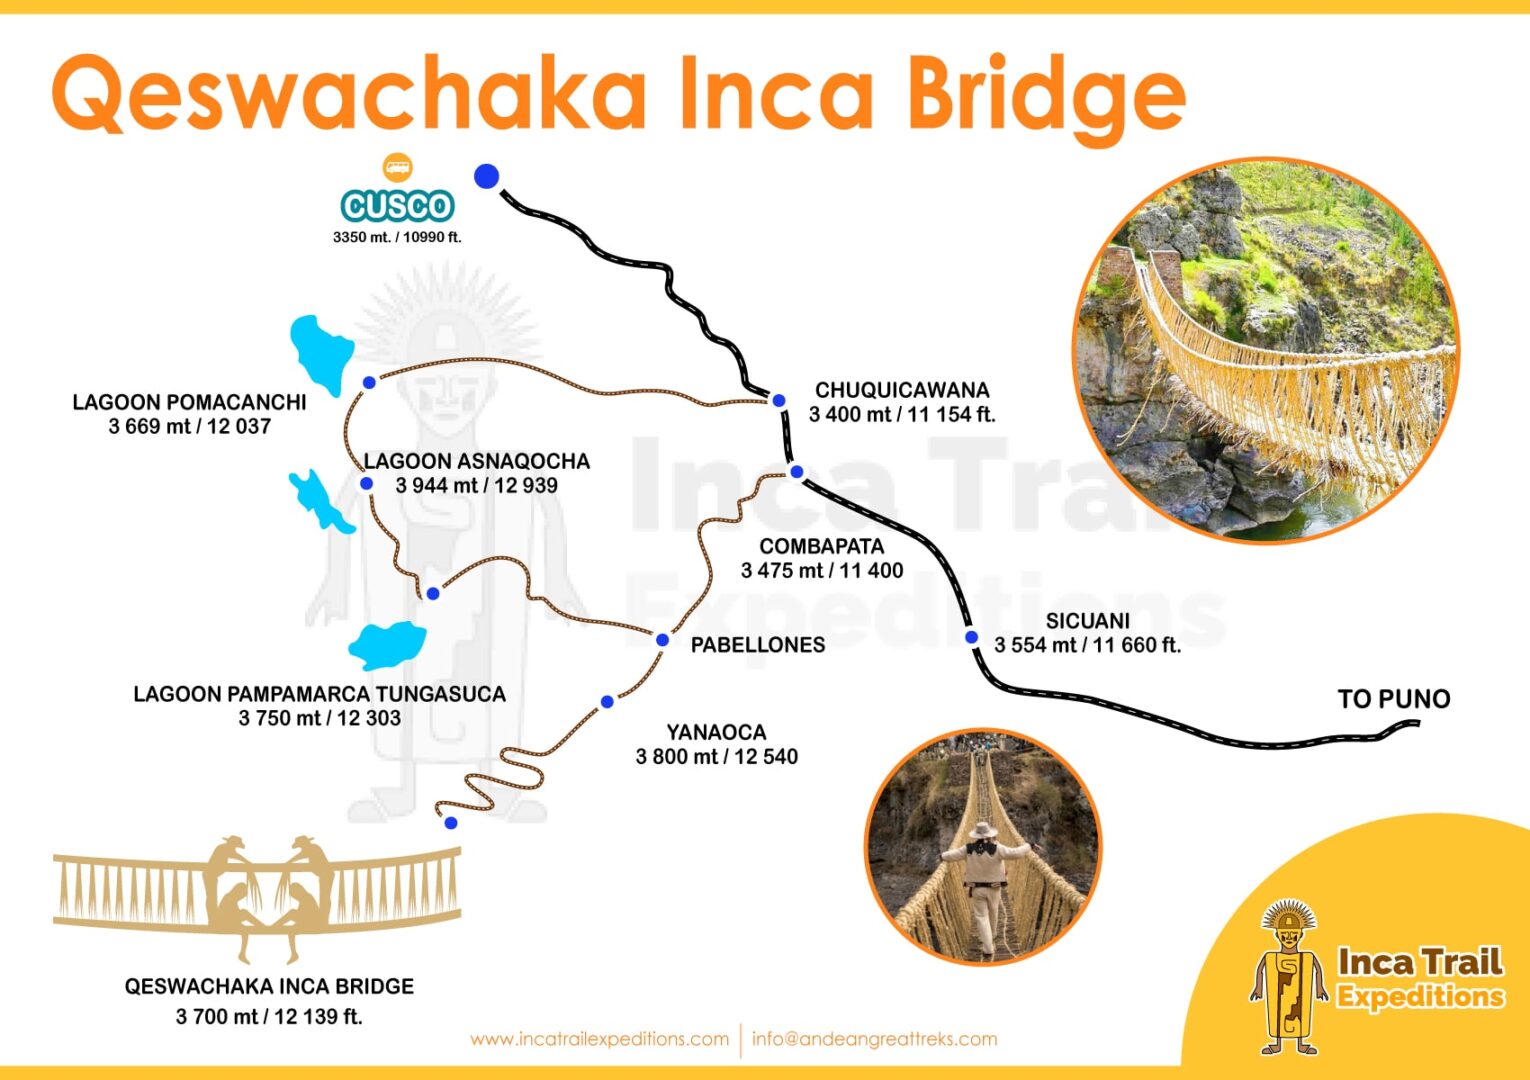 QESWACHAKA-INCA-BRIDGE-1-DAY-BY-INCA-TRAIL-EXPEDITIONS